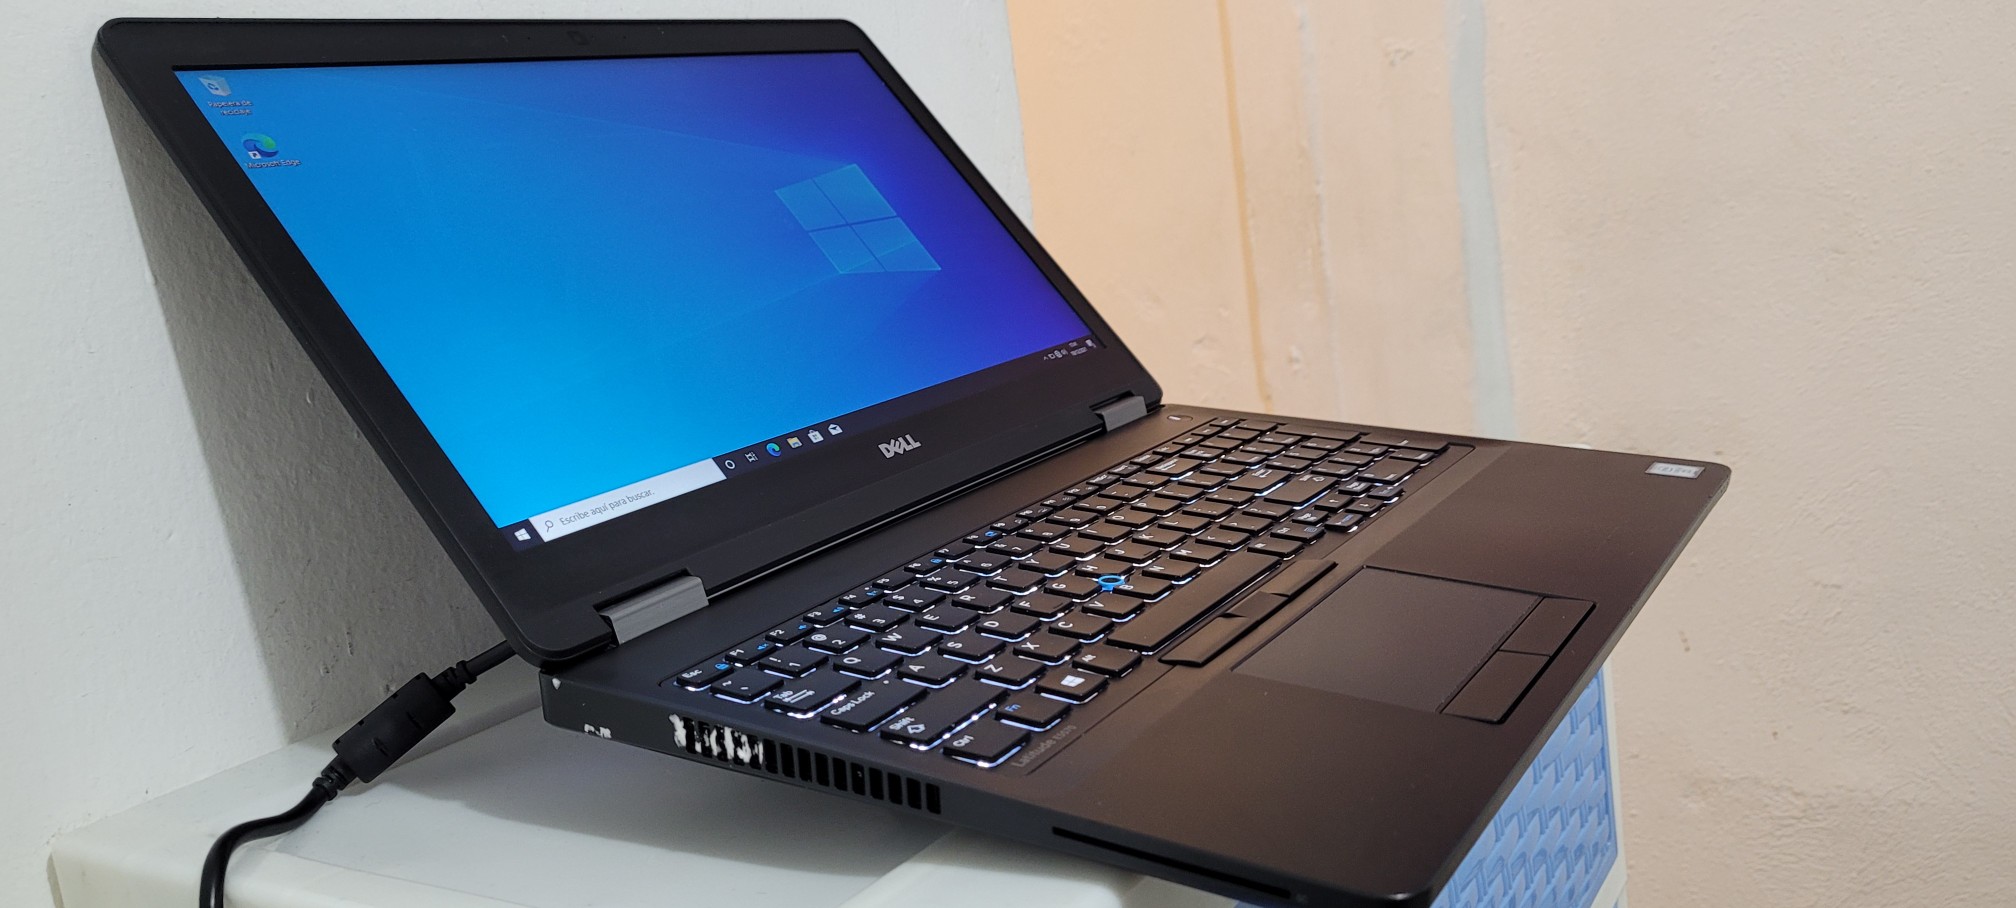 computadoras y laptops - Laptop Dell 17 Pulg Core i7 2.7ghz Ram 8gb Disco 1000gb Video 6gb 1